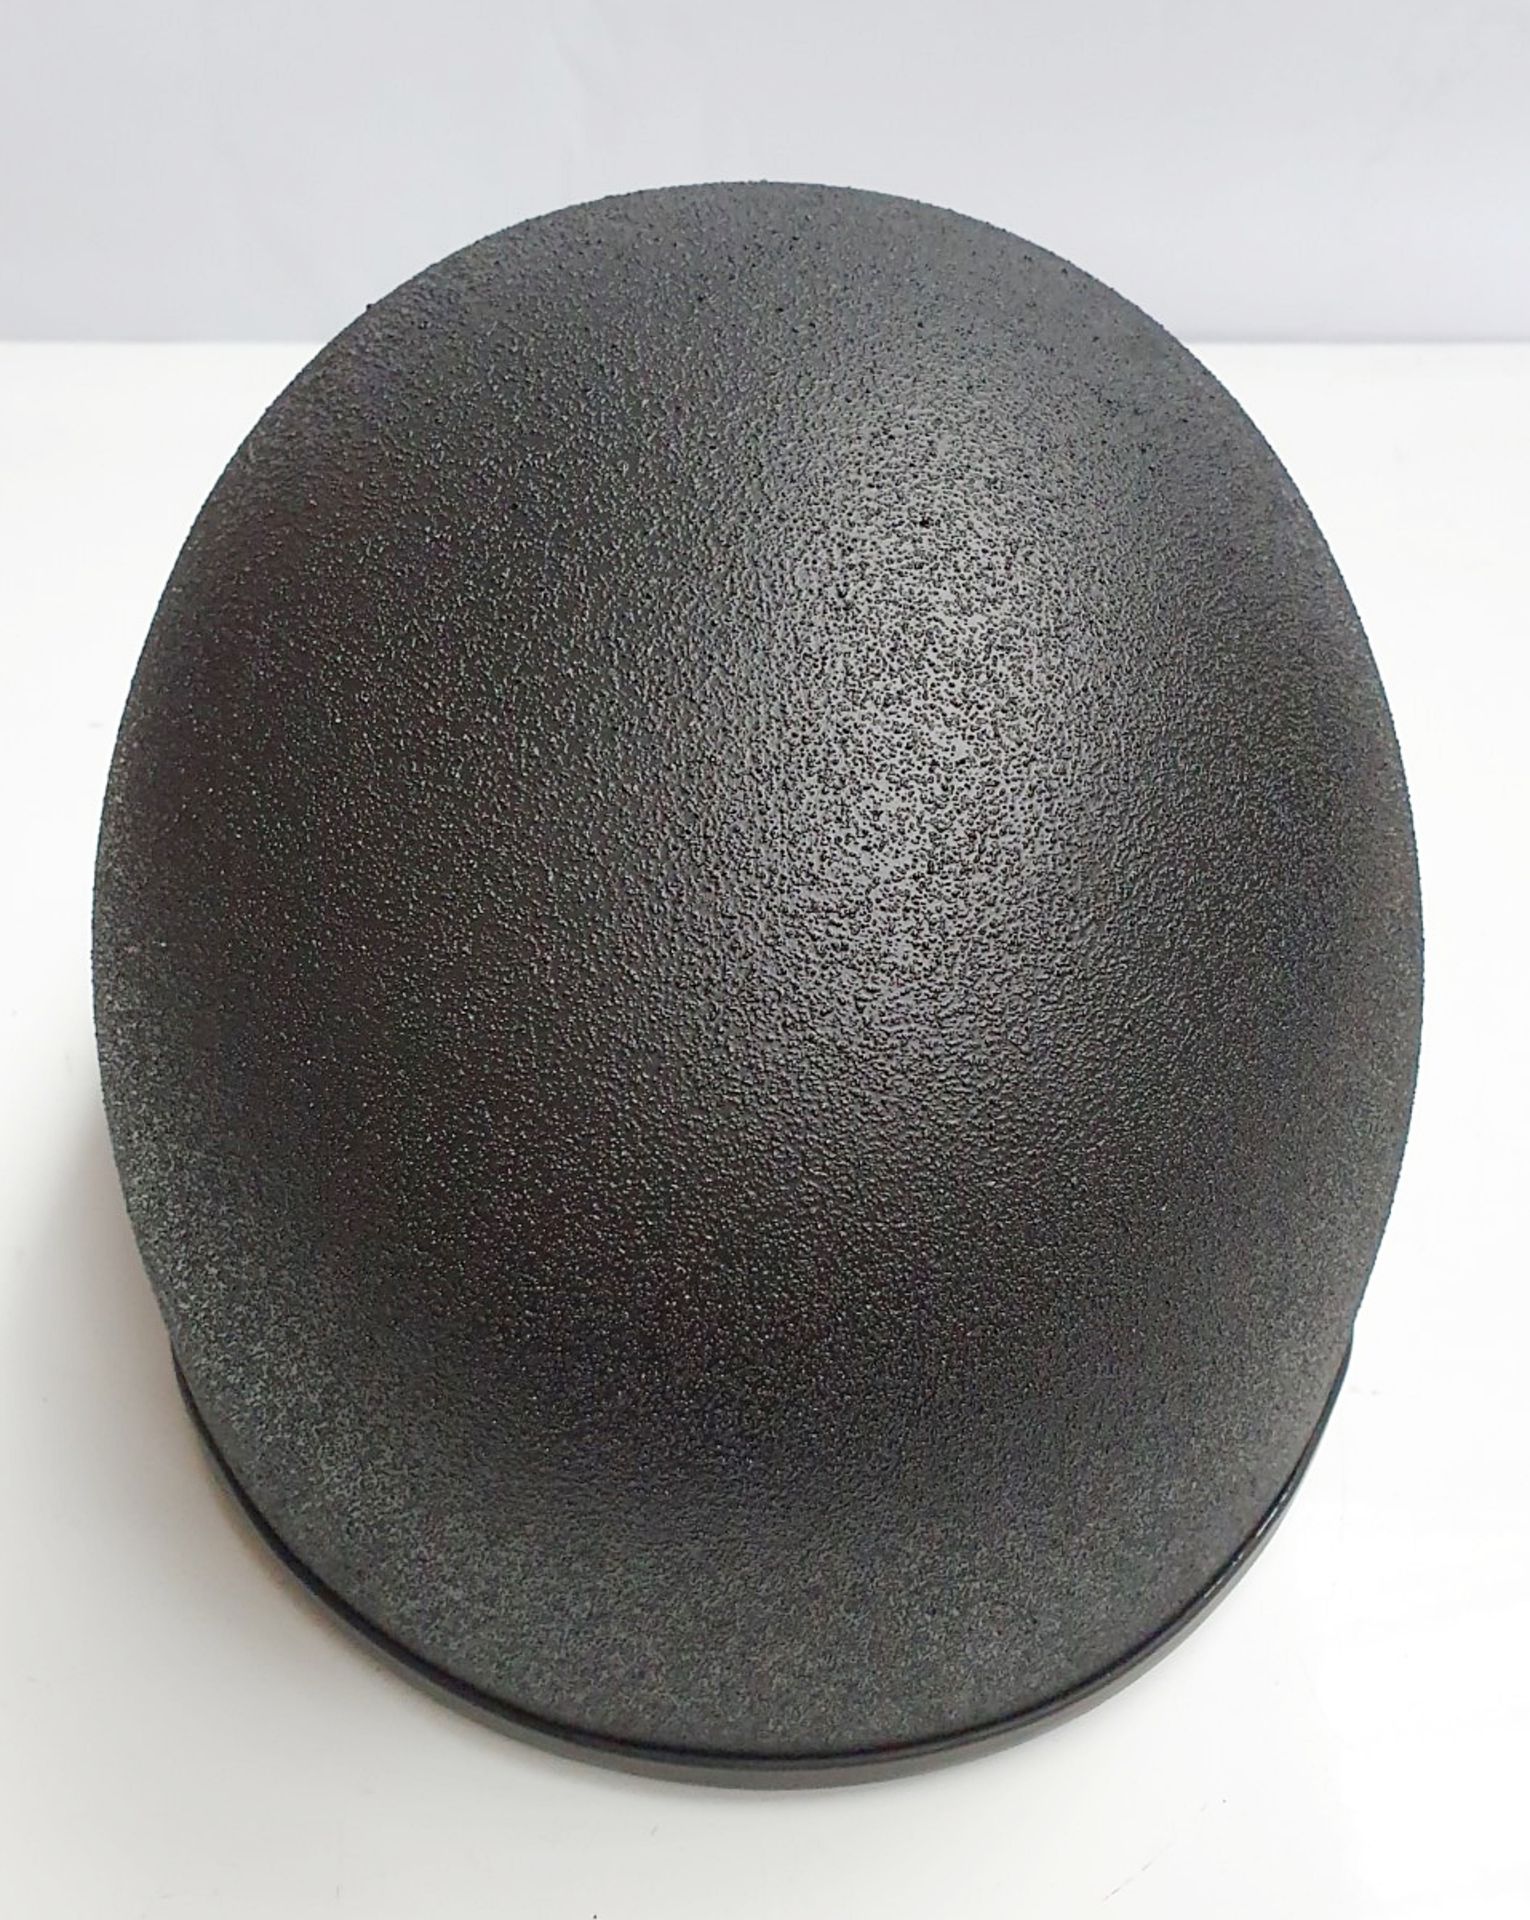 1 x Junior Plus Equestrian Jockey Helmet in Black - Size: 59-60cm - Ref726 - CL401 - Brand New Stock - Image 7 of 7